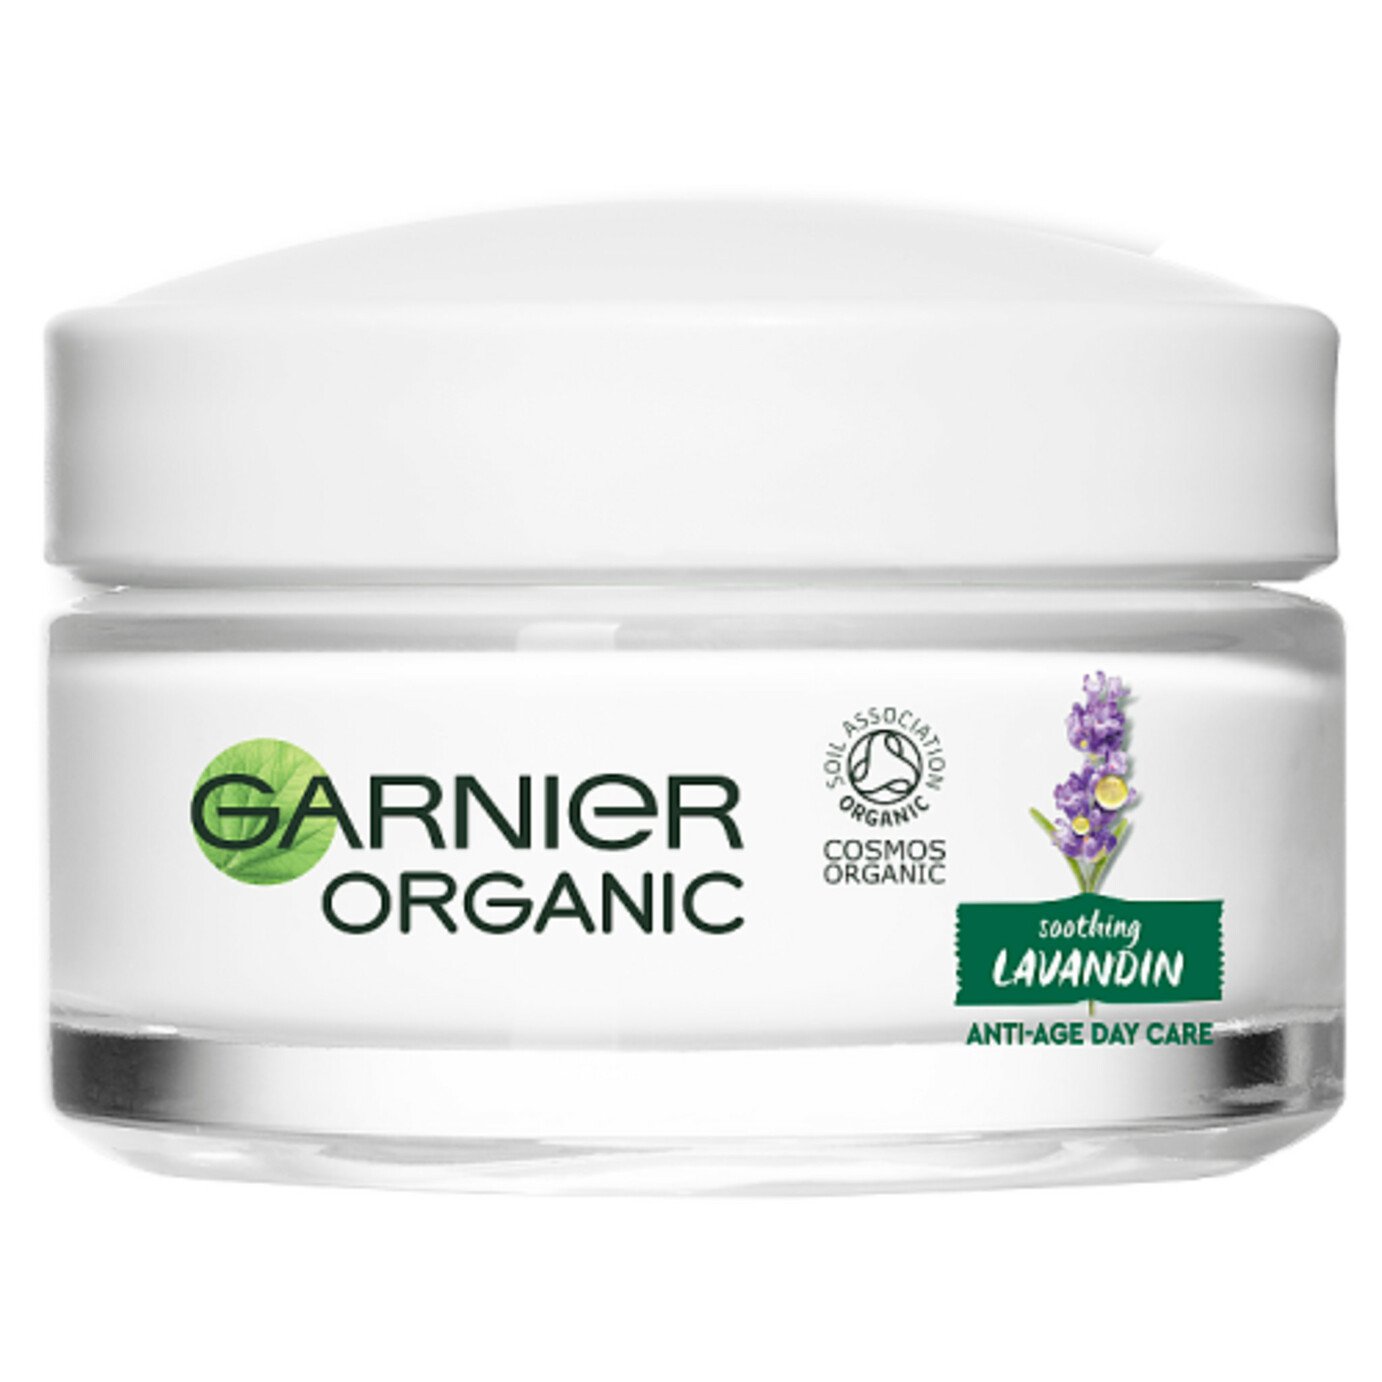 Garnier Organic Lavandin Anti-Ageing Day Cream